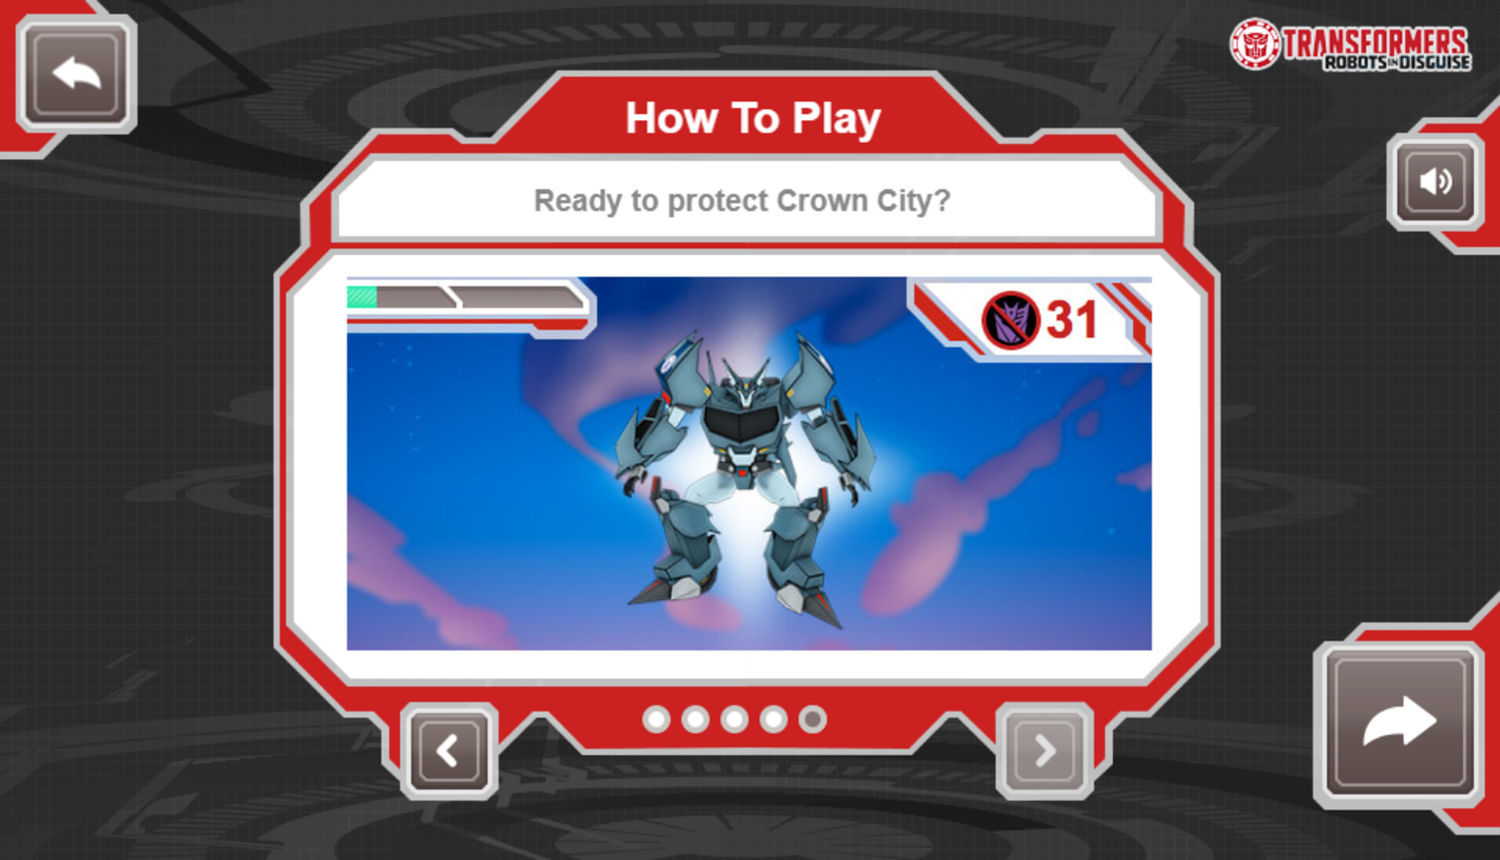 Transformers Protect Crown City Game Goal Screenshot.